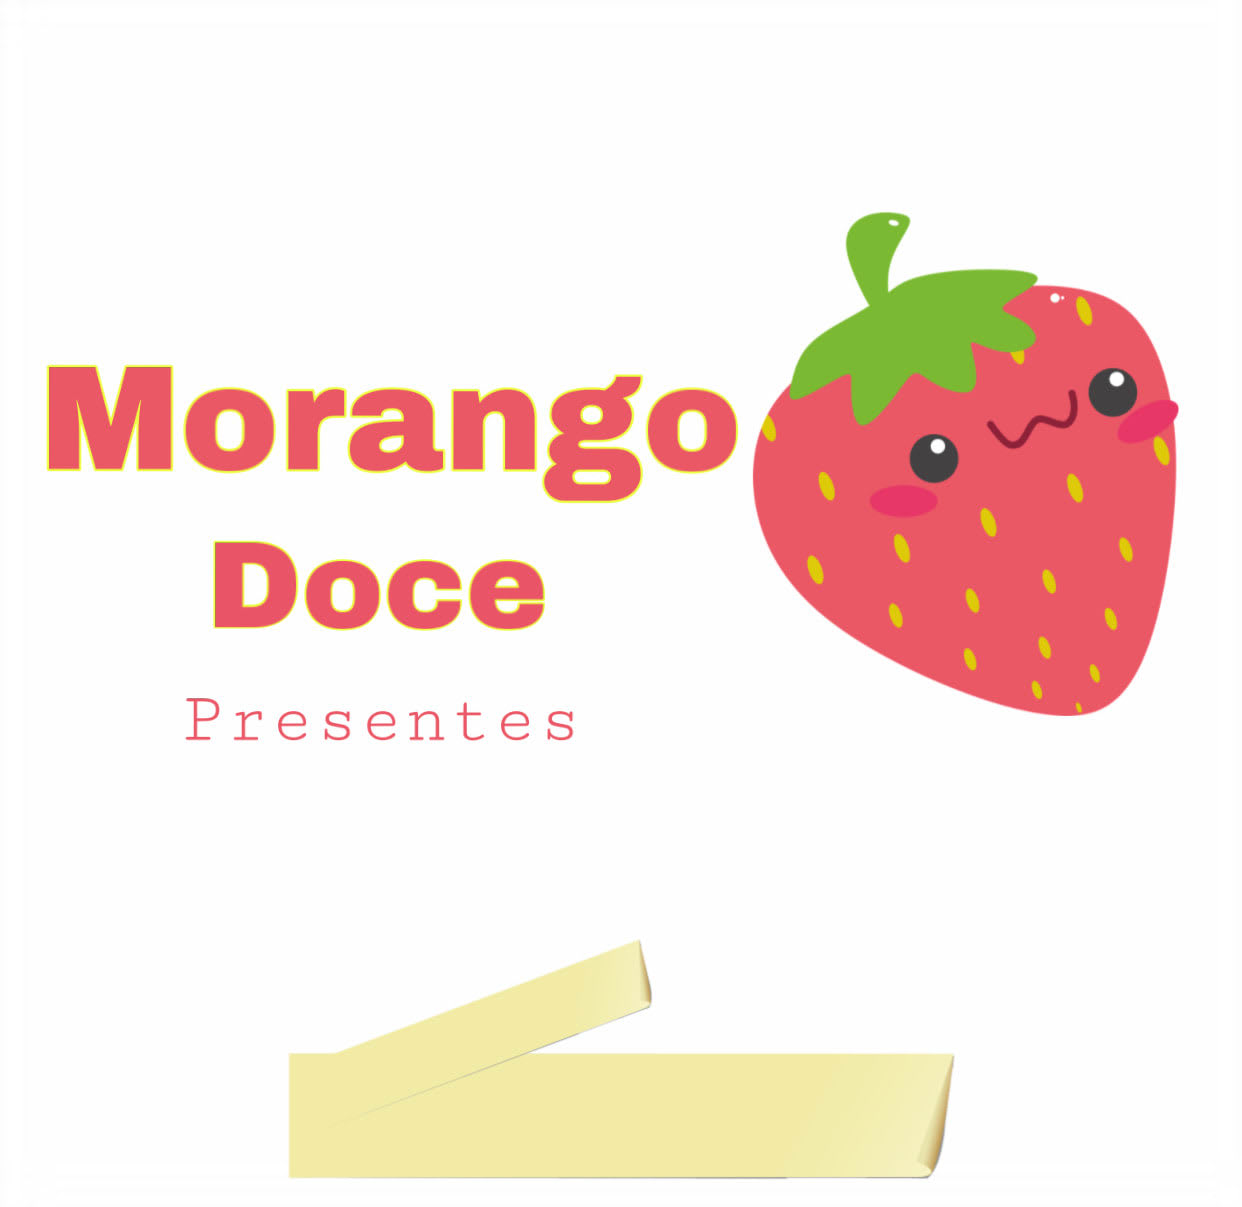 Morango Doce Presentes